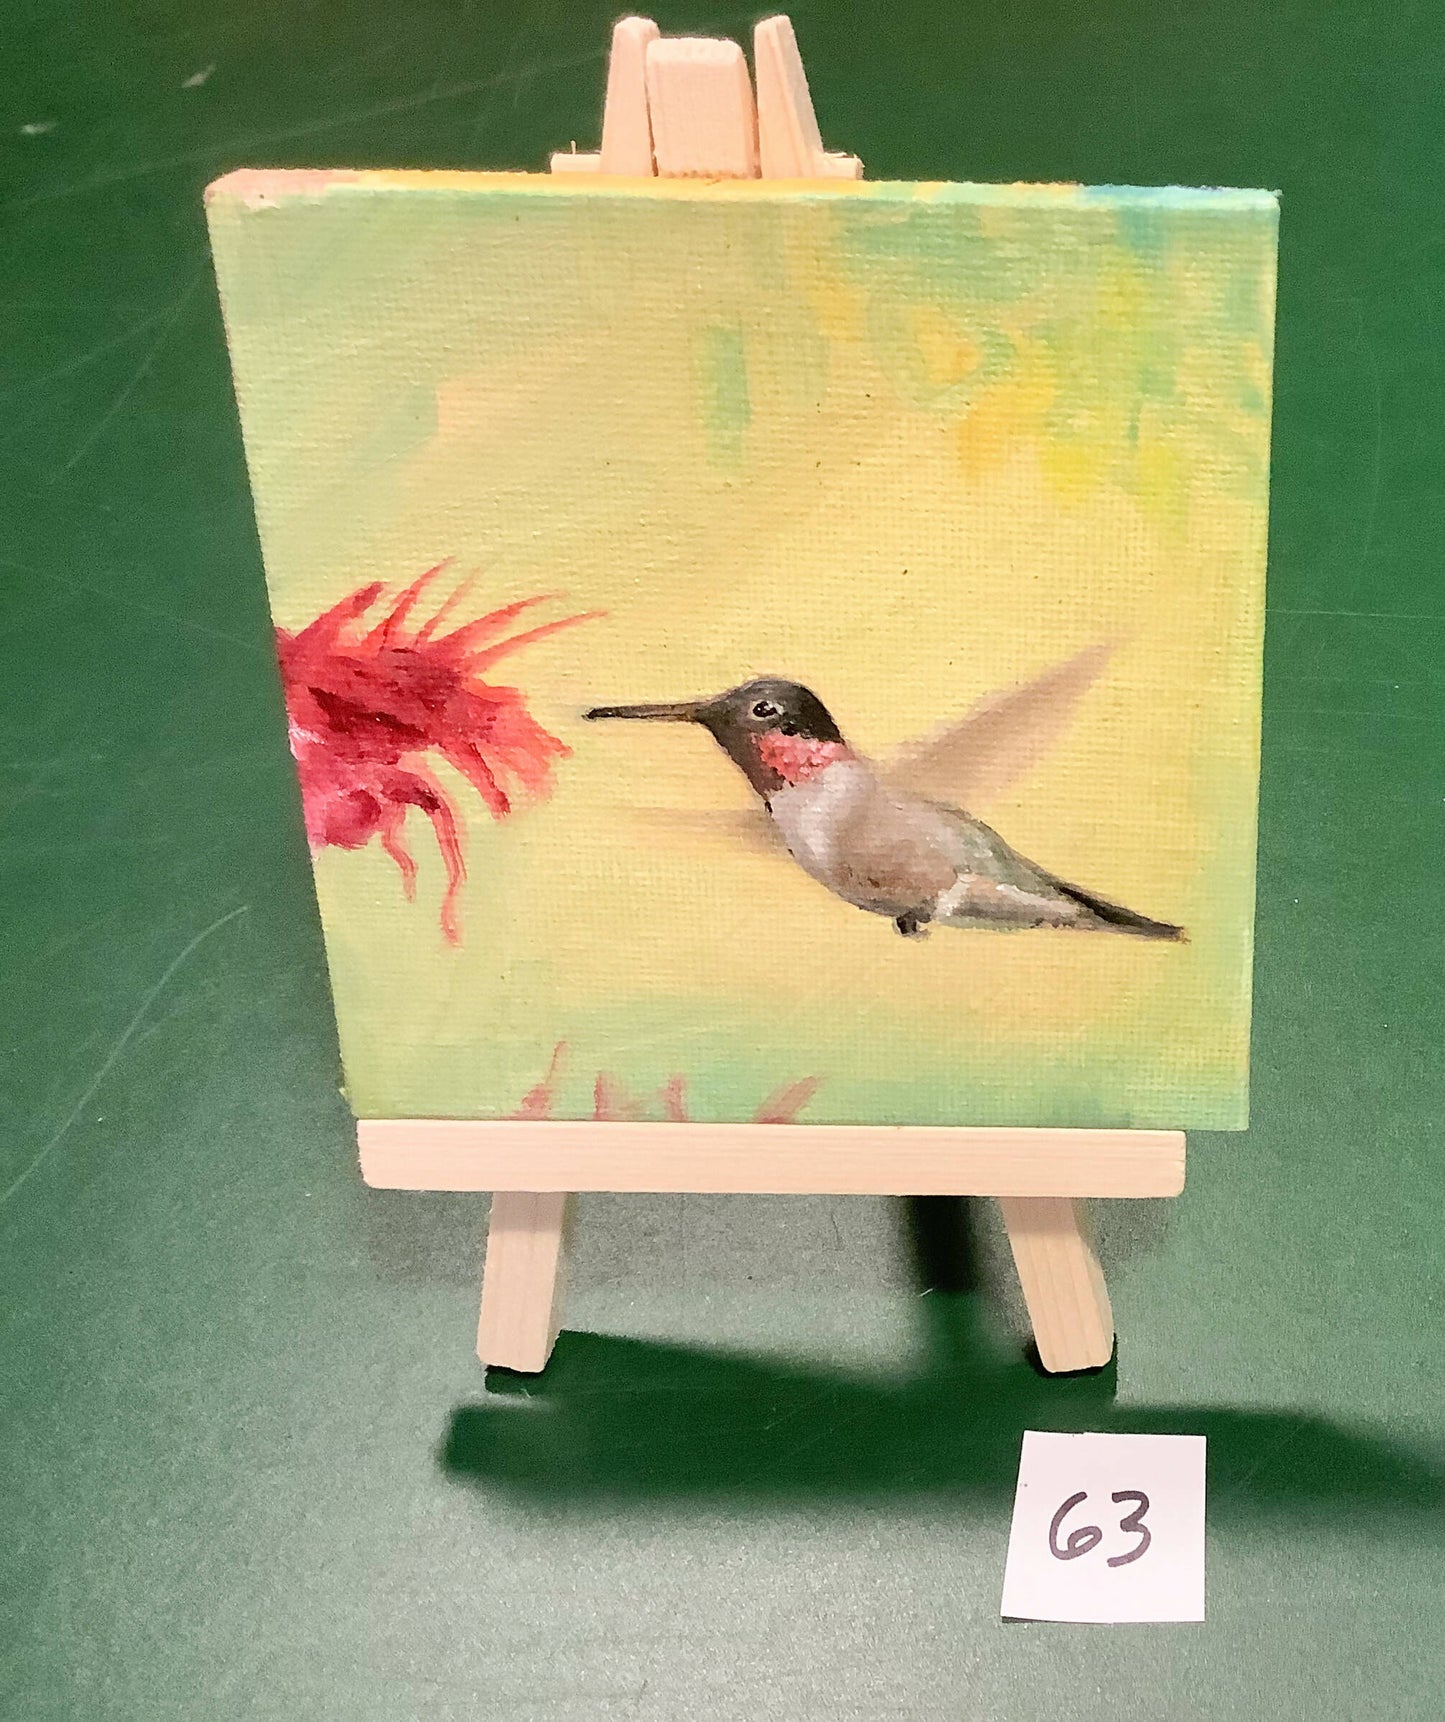 Hummingbird 63